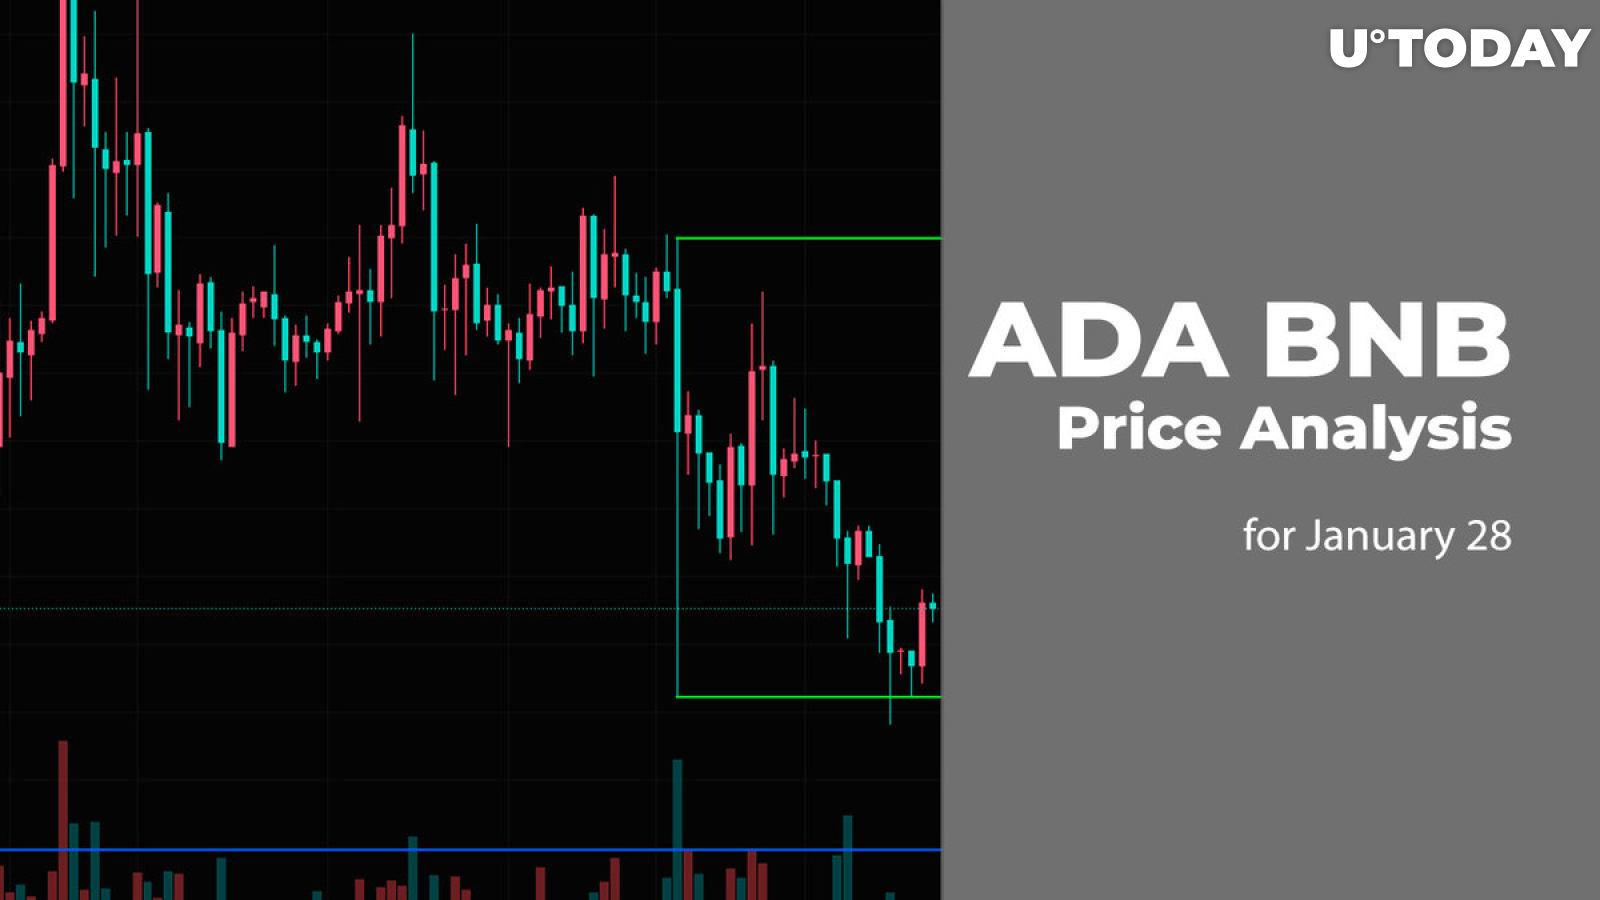 ADA and BNB Price Analysis for January 28